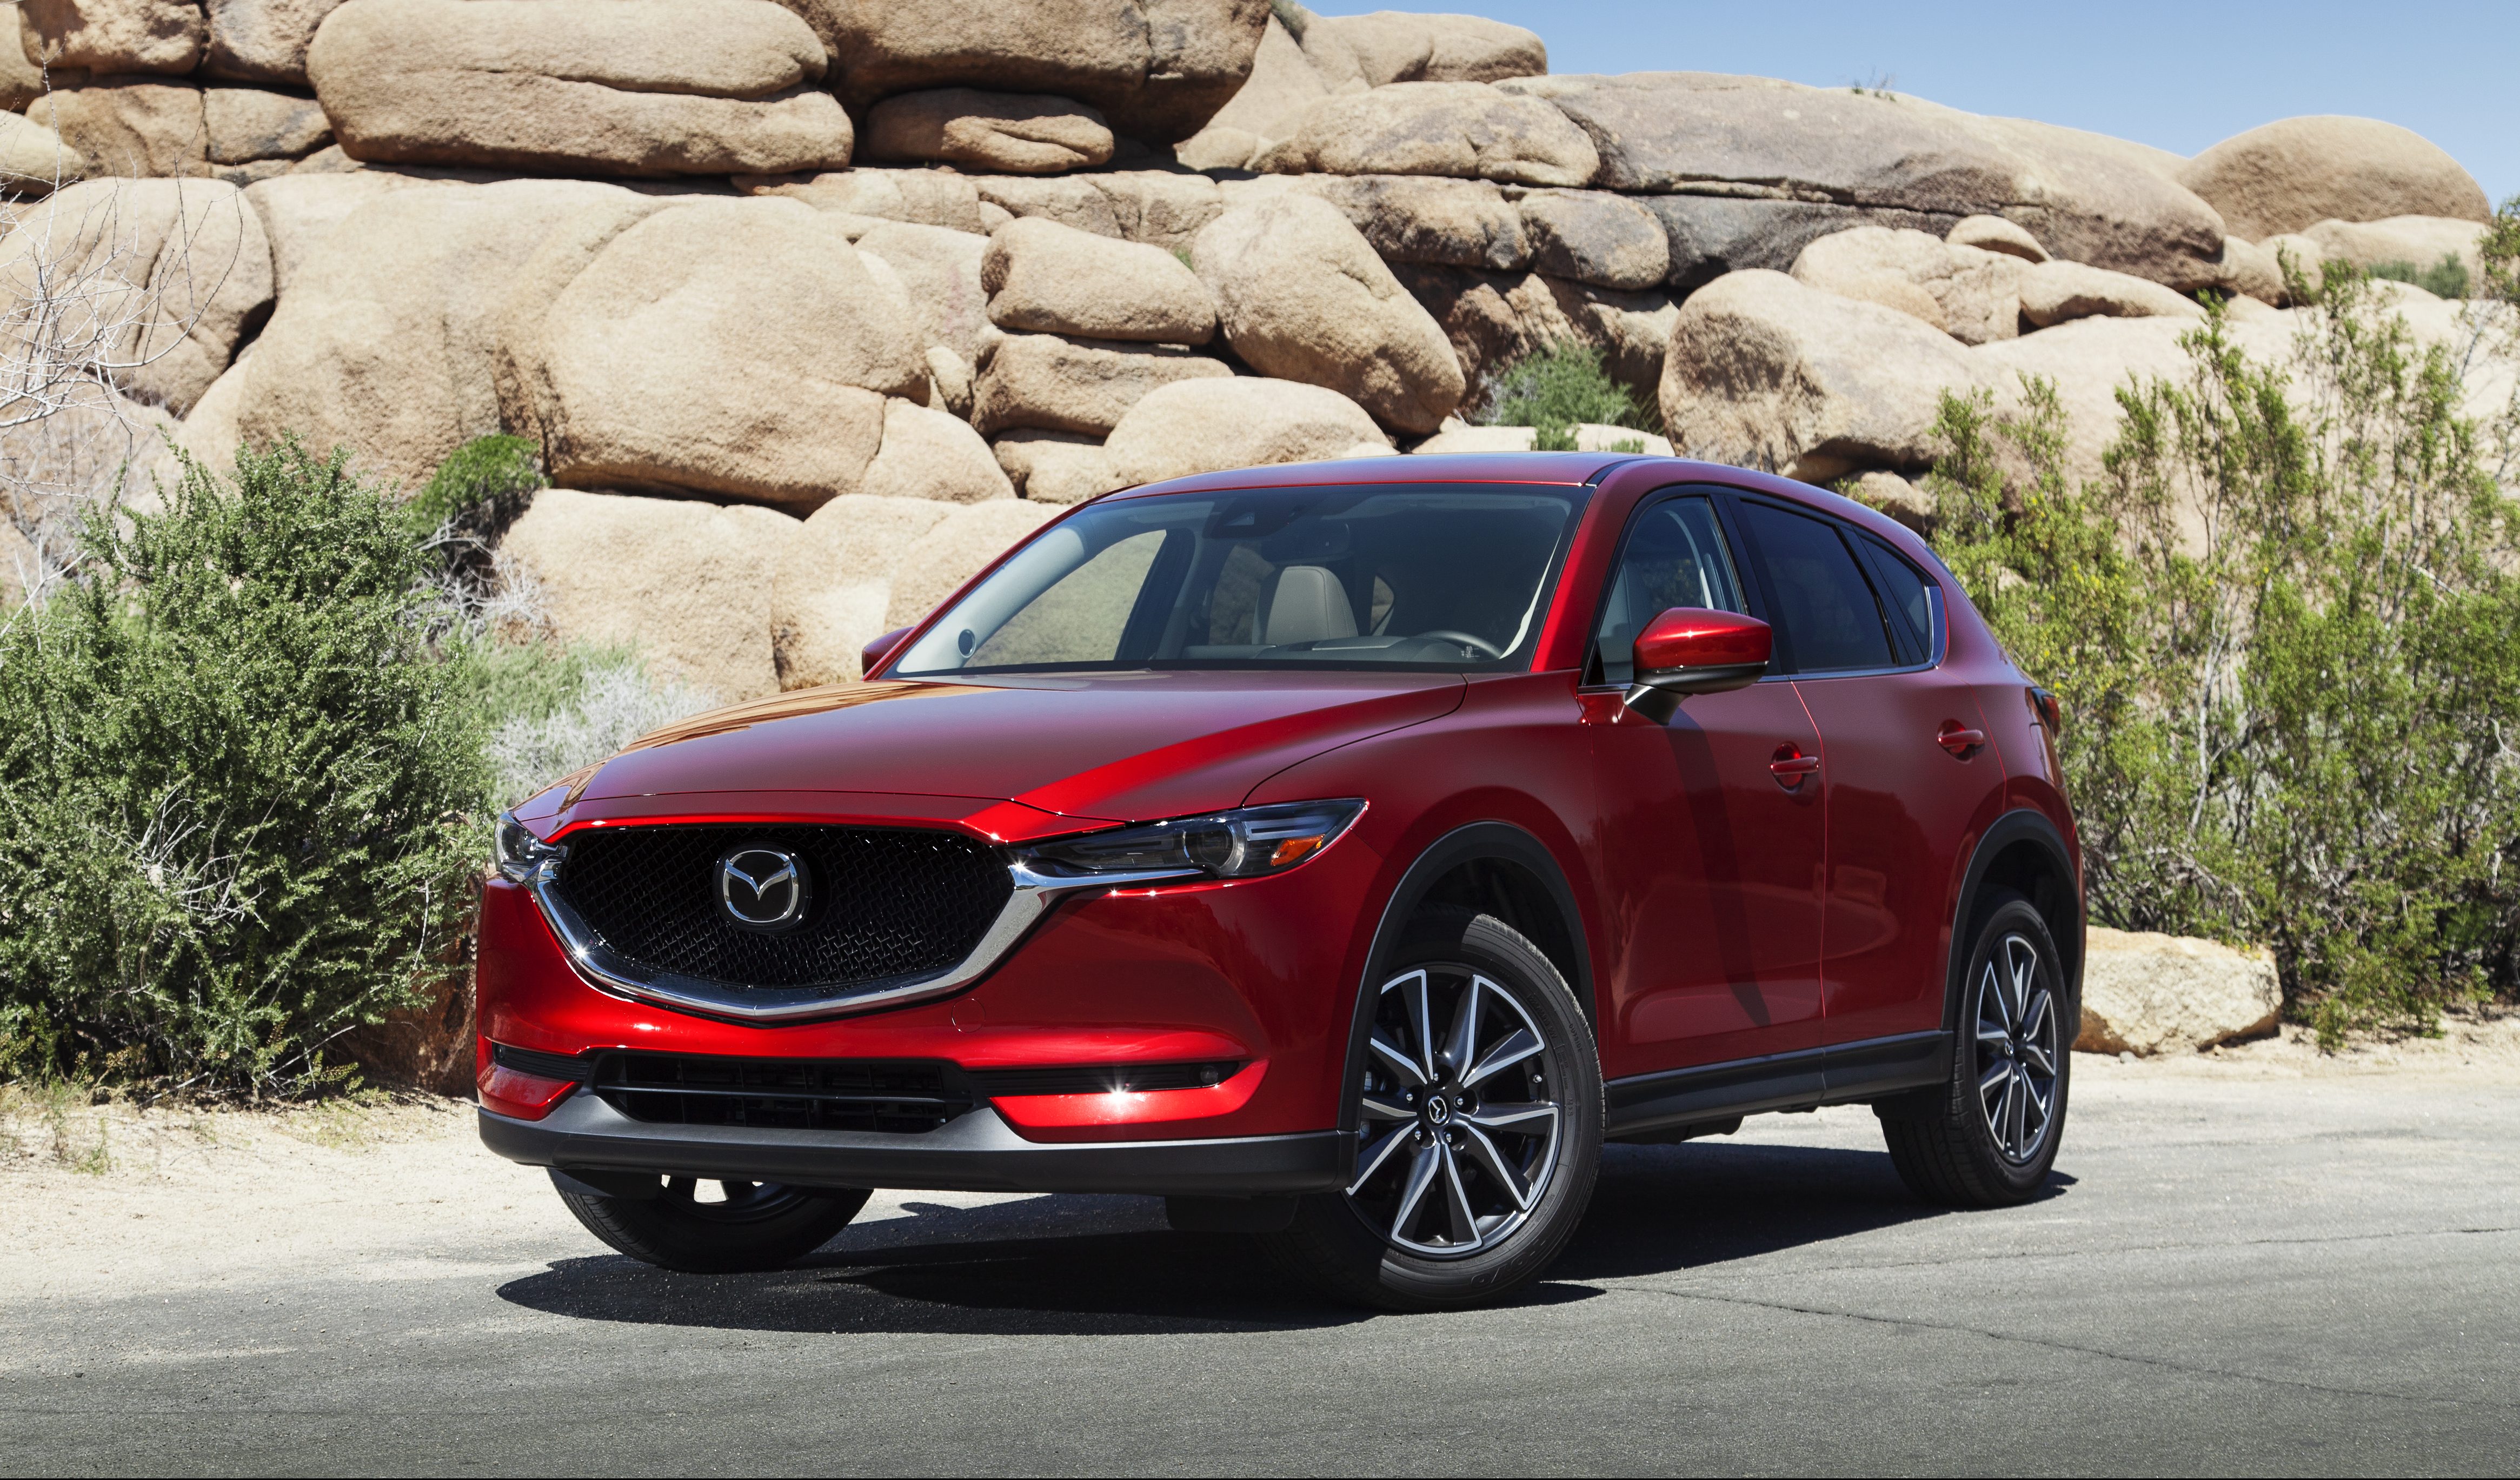 2019 Mazda CX-5 Pricing Confirmed